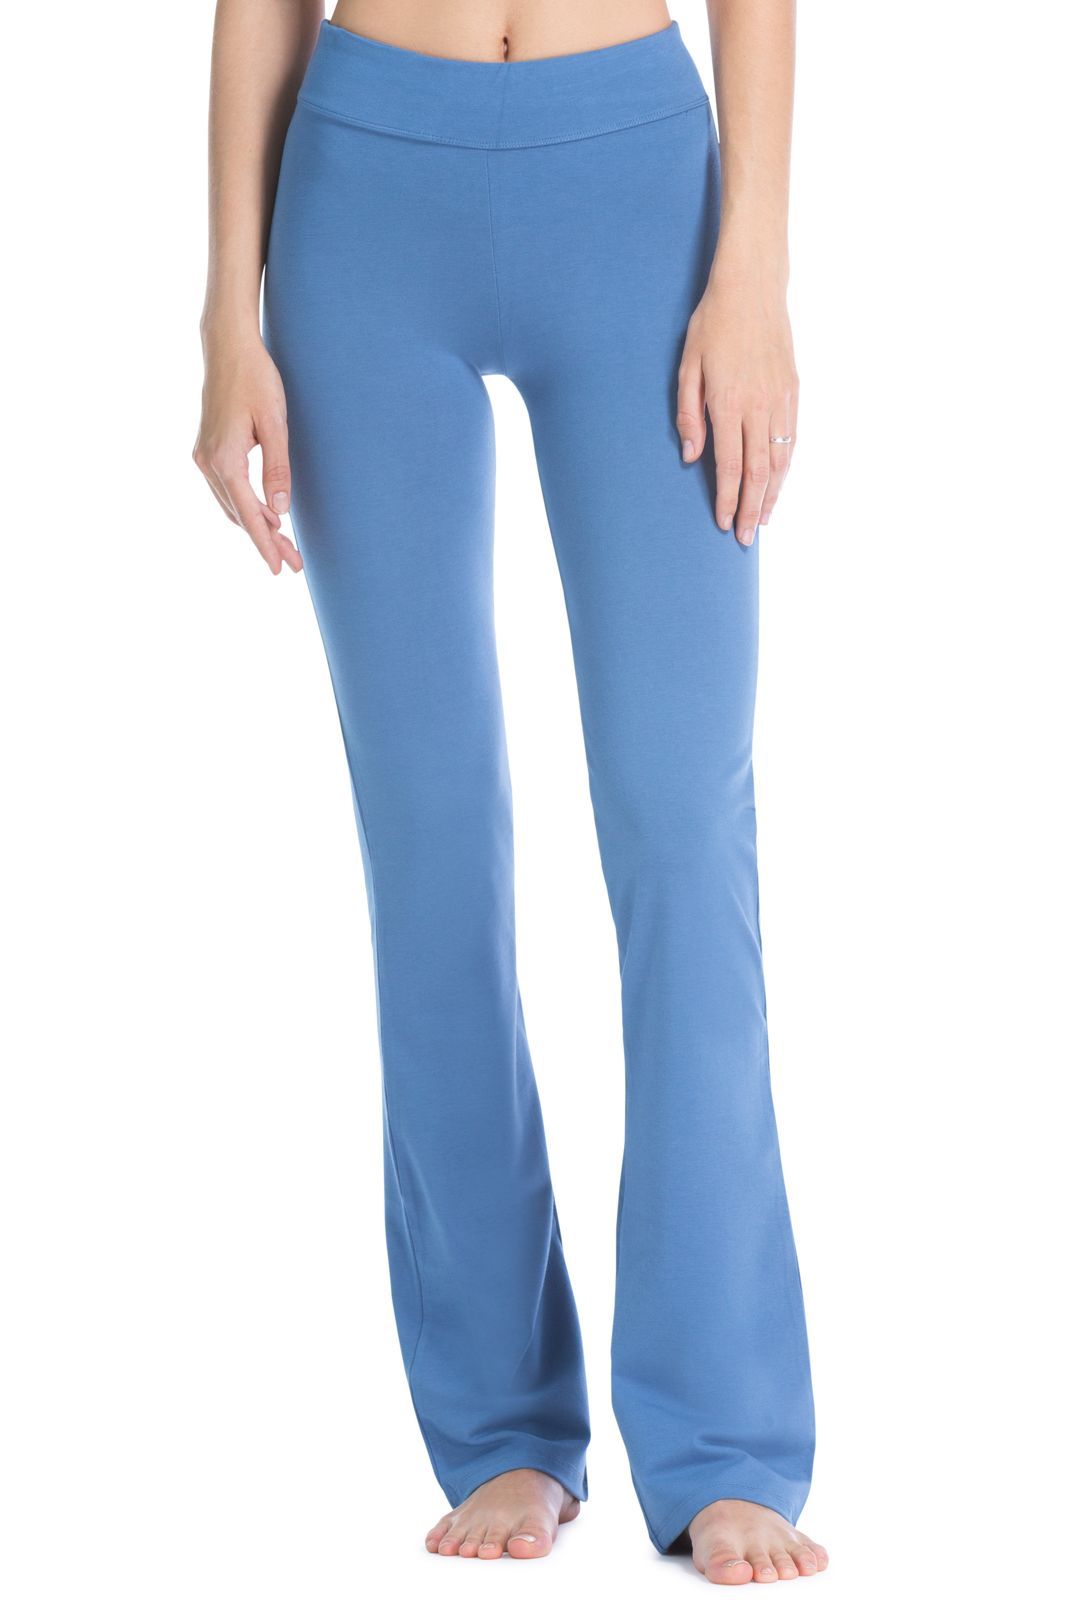 Womens Bootcut Yoga Pants Bootleg Flared Trousers Casual Stretch Sports  Leggings | eBay